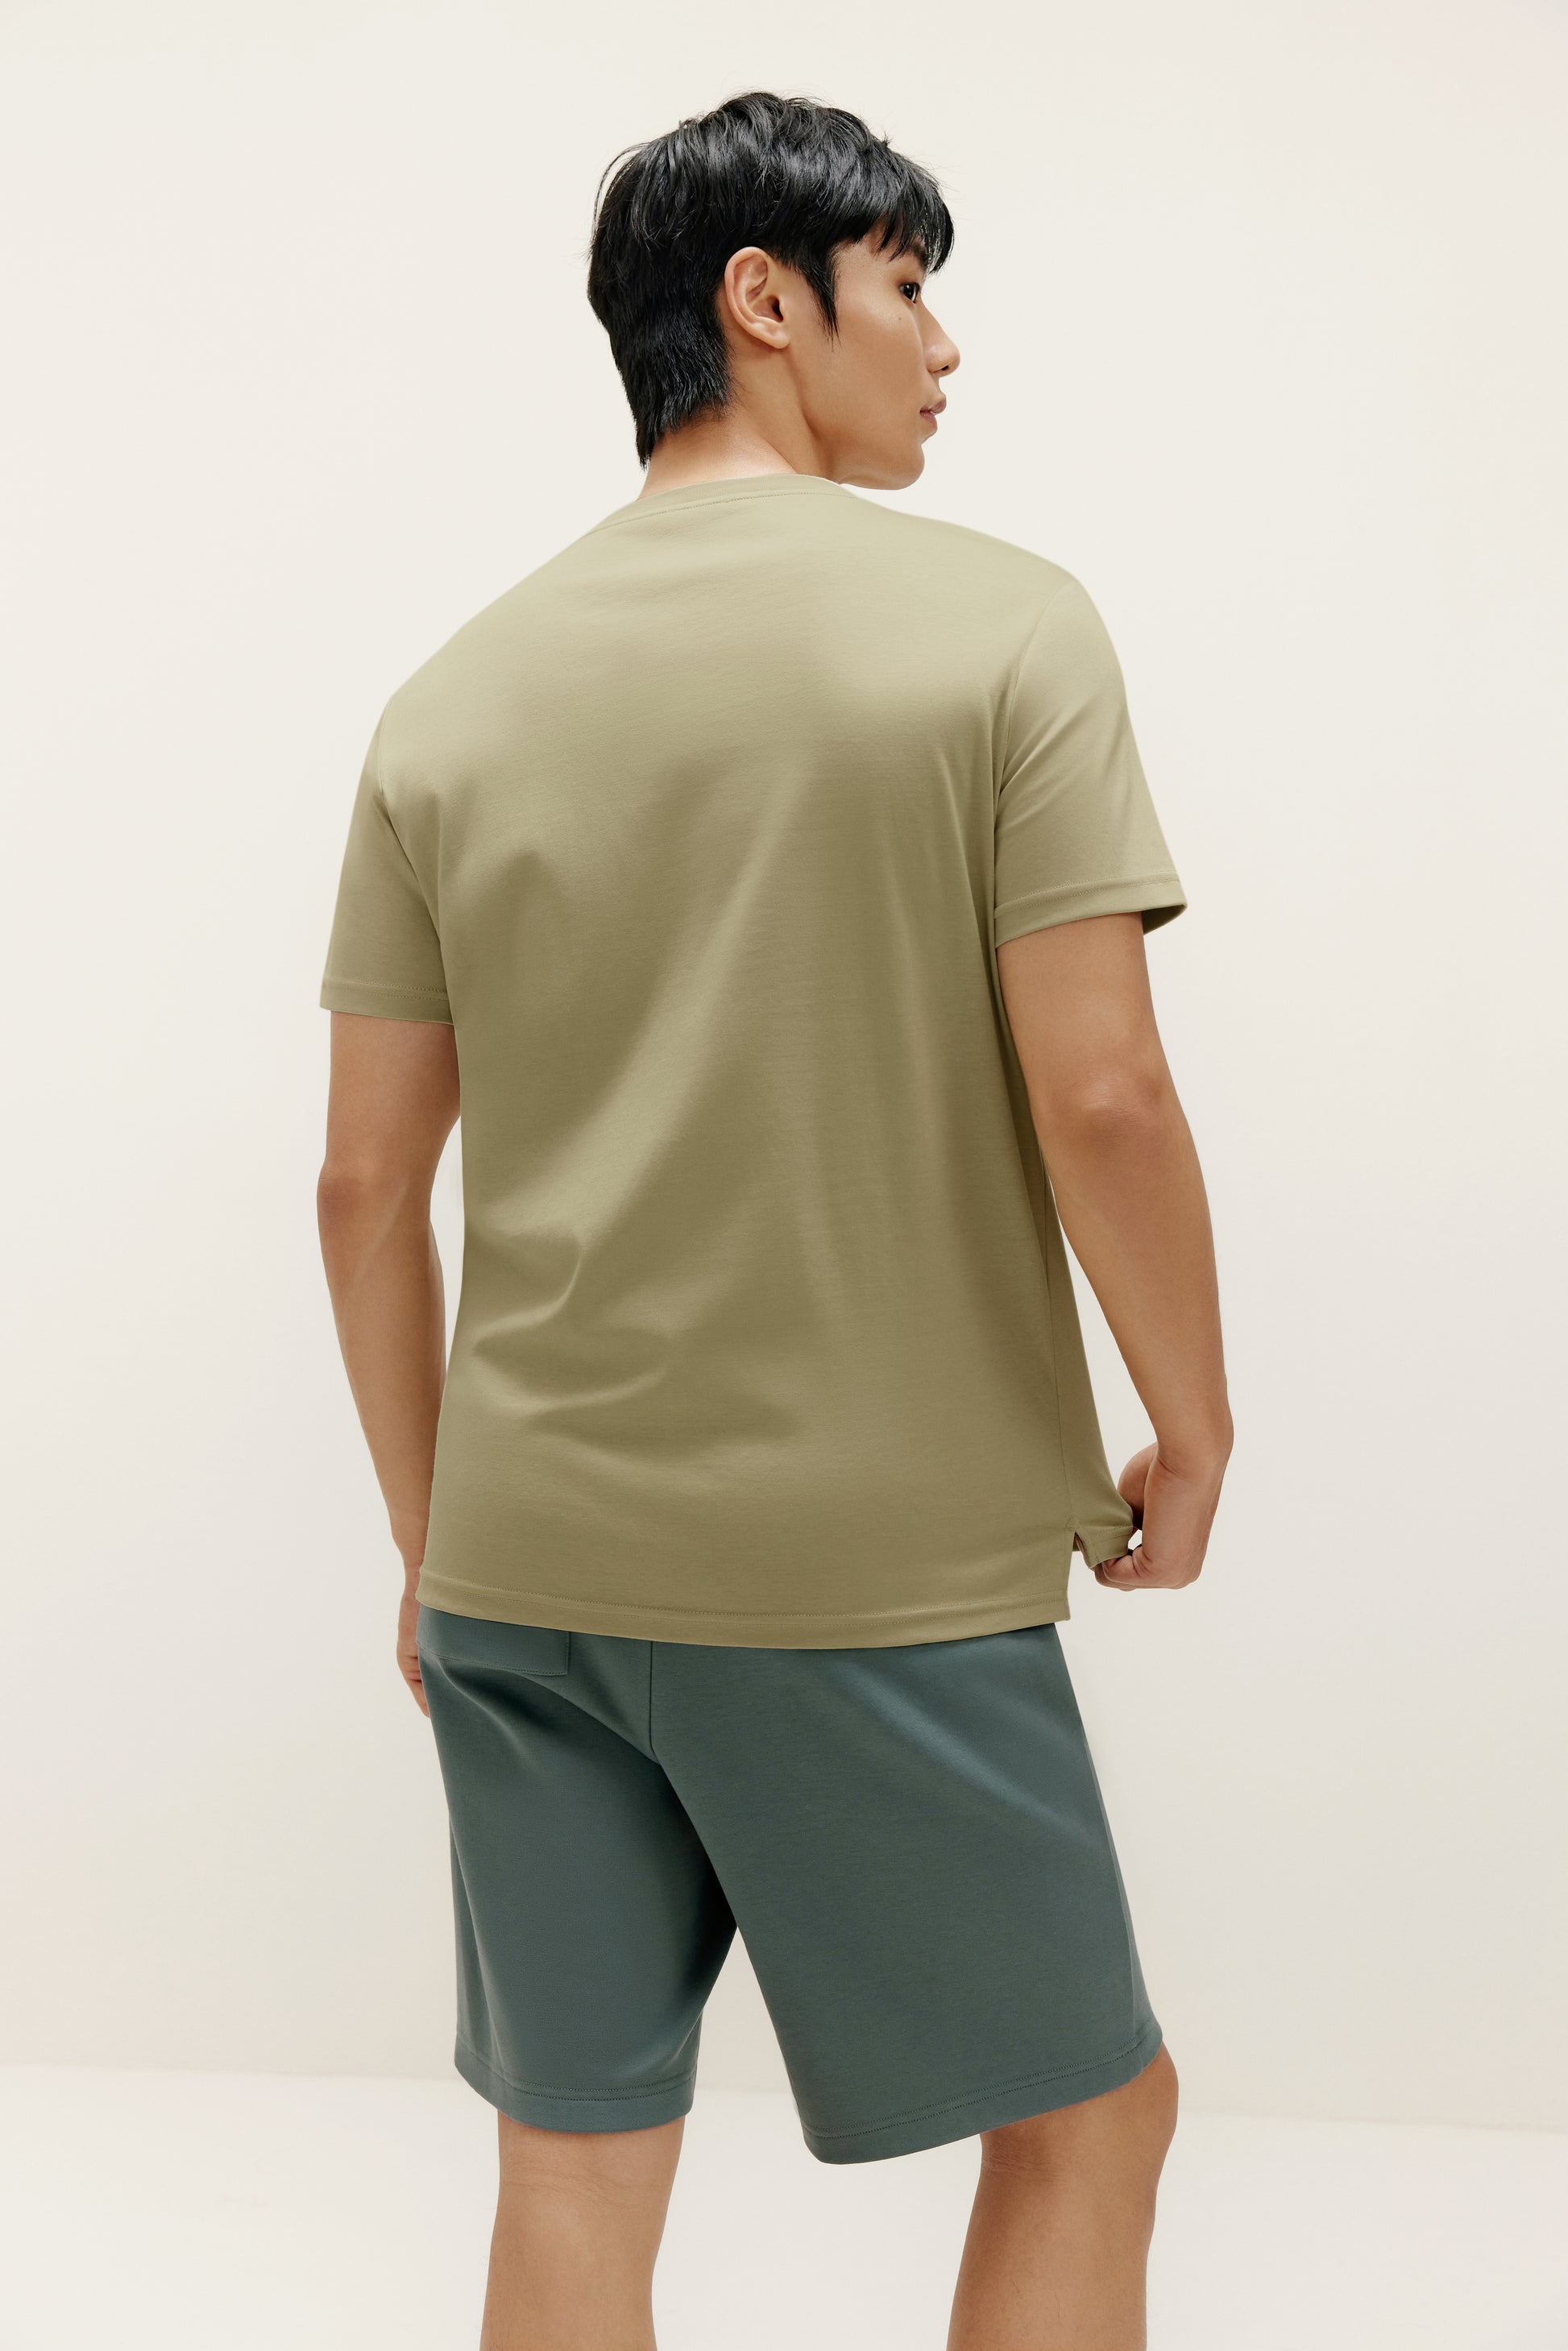 back of a man wearing green t shirt and dark green shorts